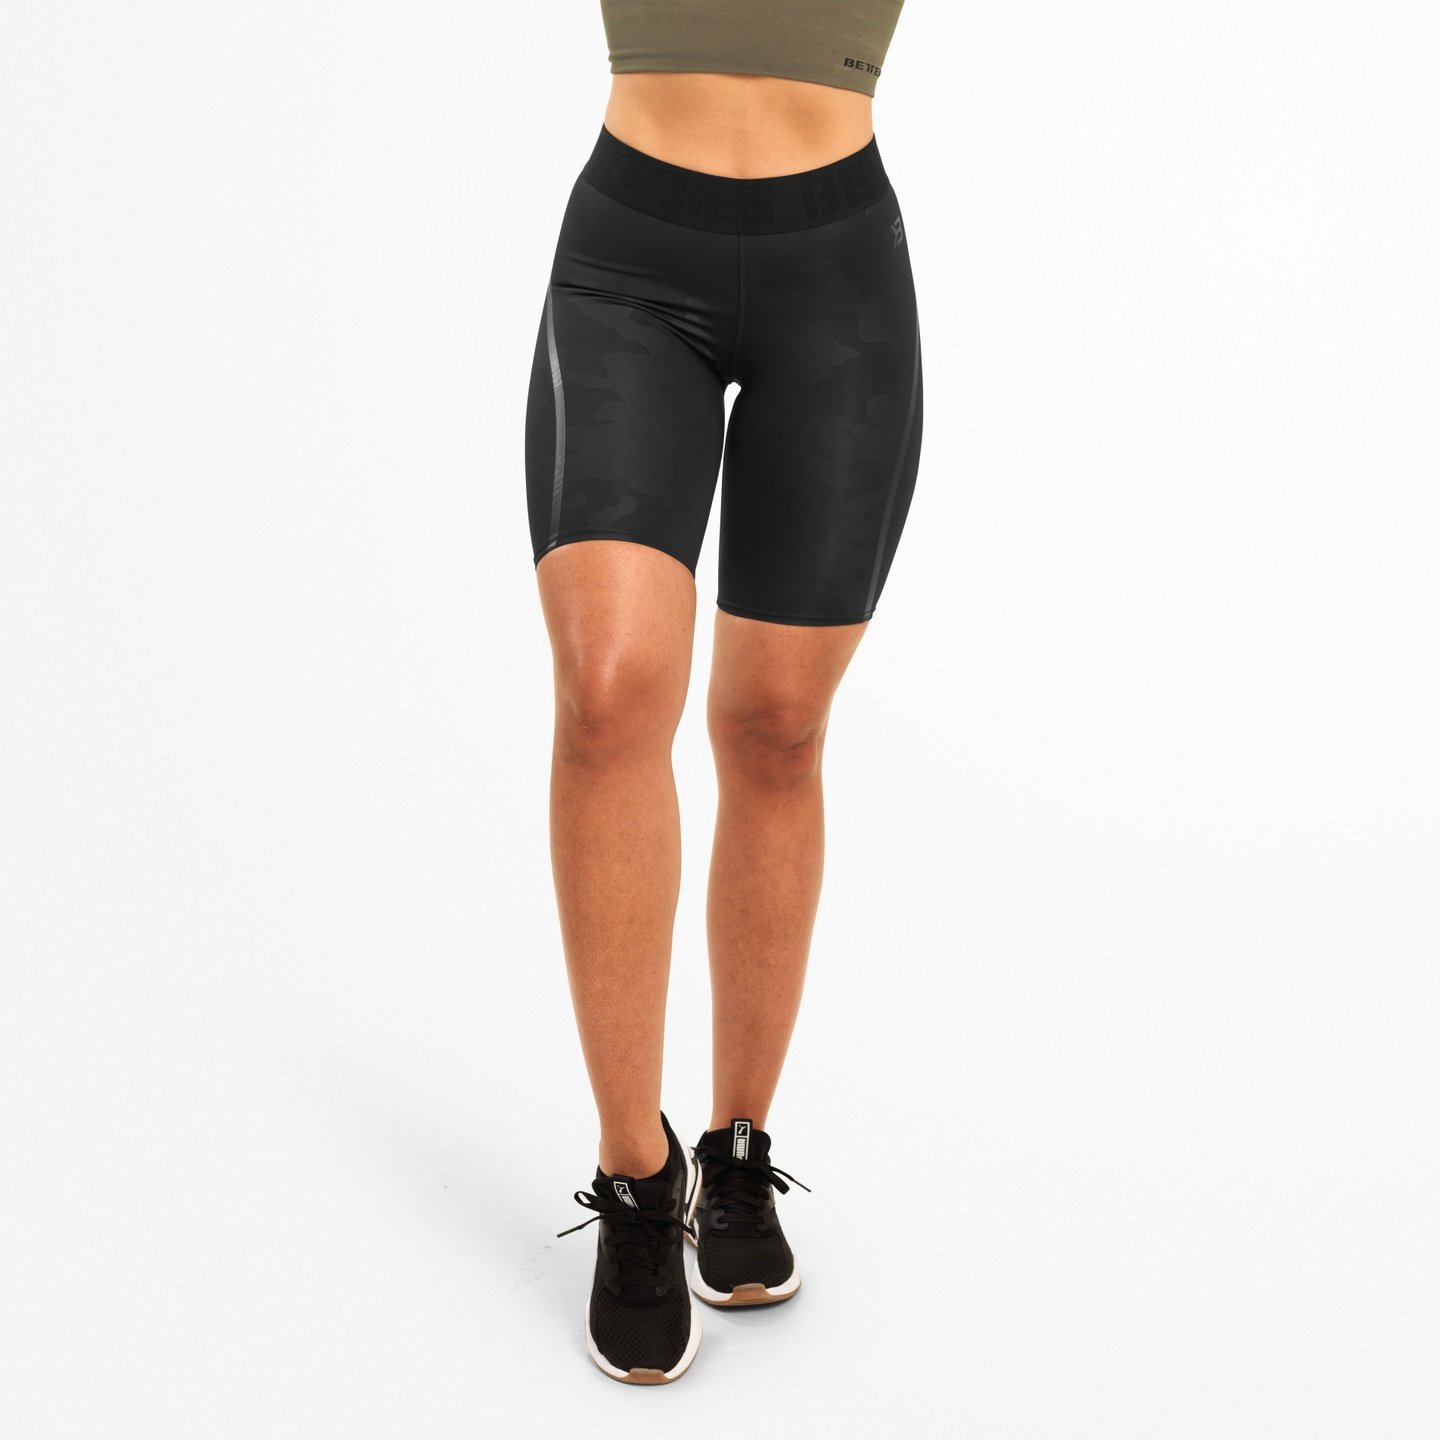 Шортс. Шорты беттер бодис женские. Шорты женские better bodies Madison shorts (черный 110851-999). Велосипедки Champion shorts. Велосипедки рибок женские.